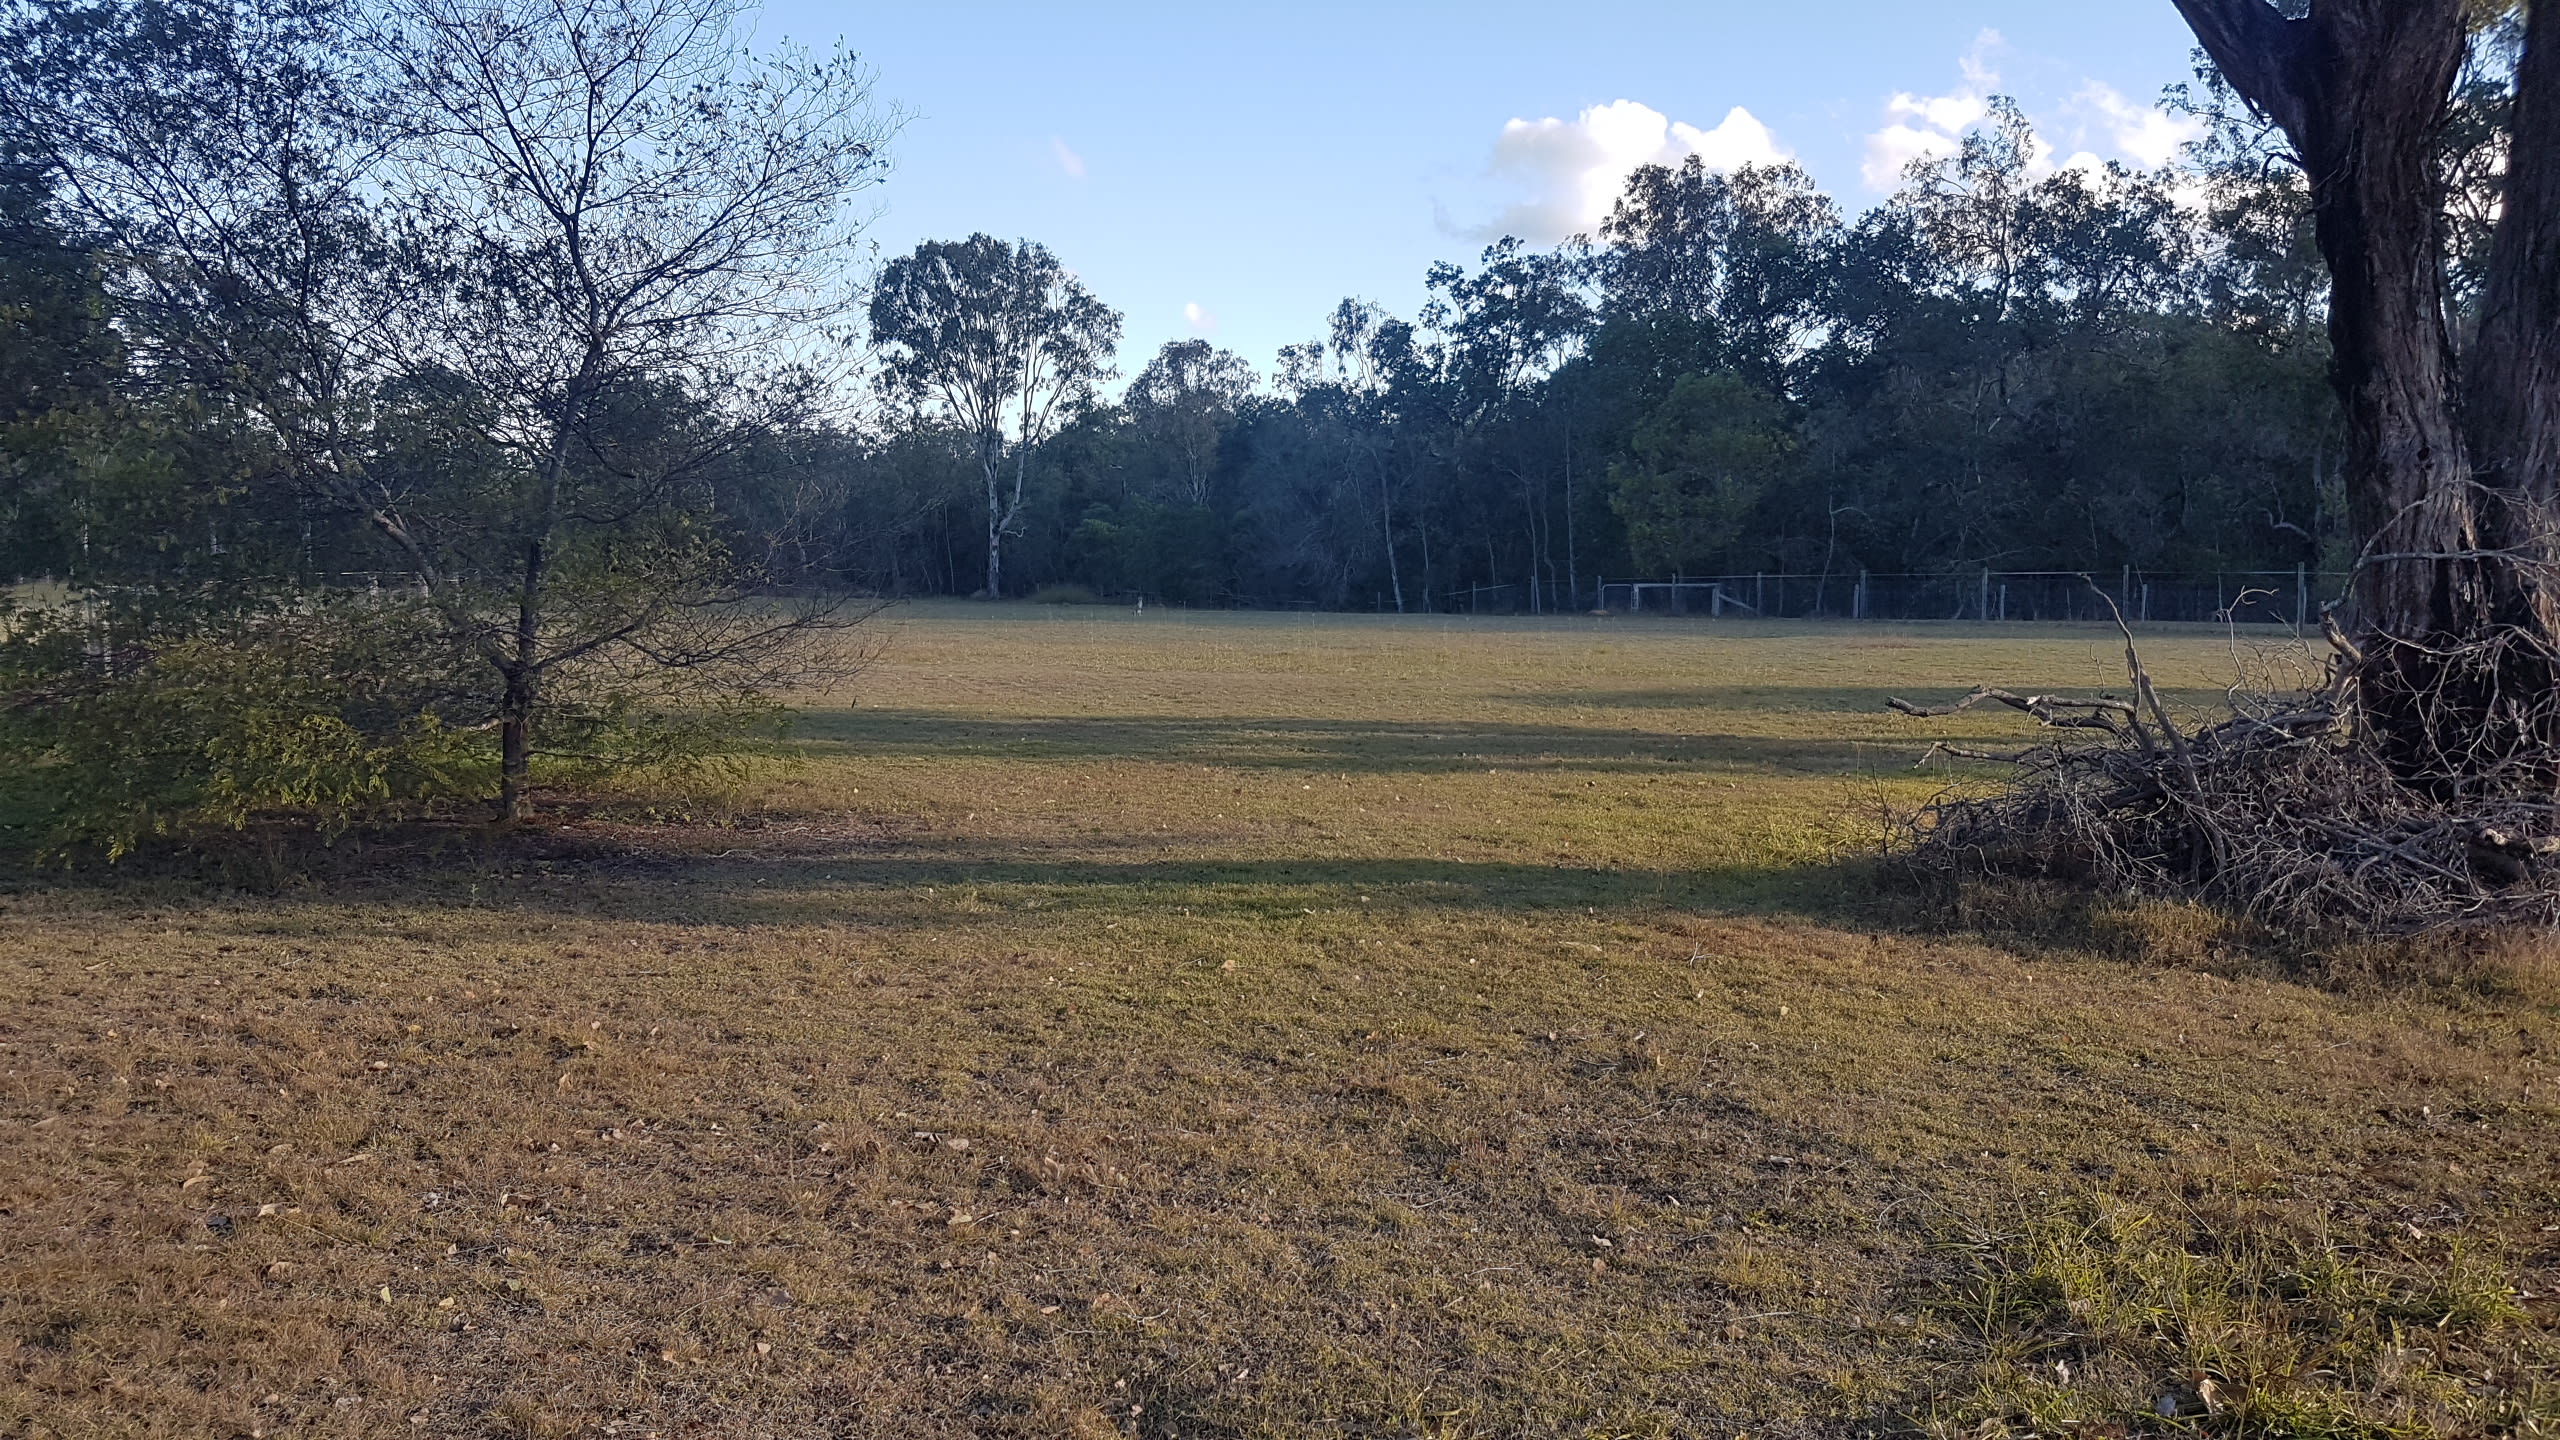 Grass Field with Bush Surrounding